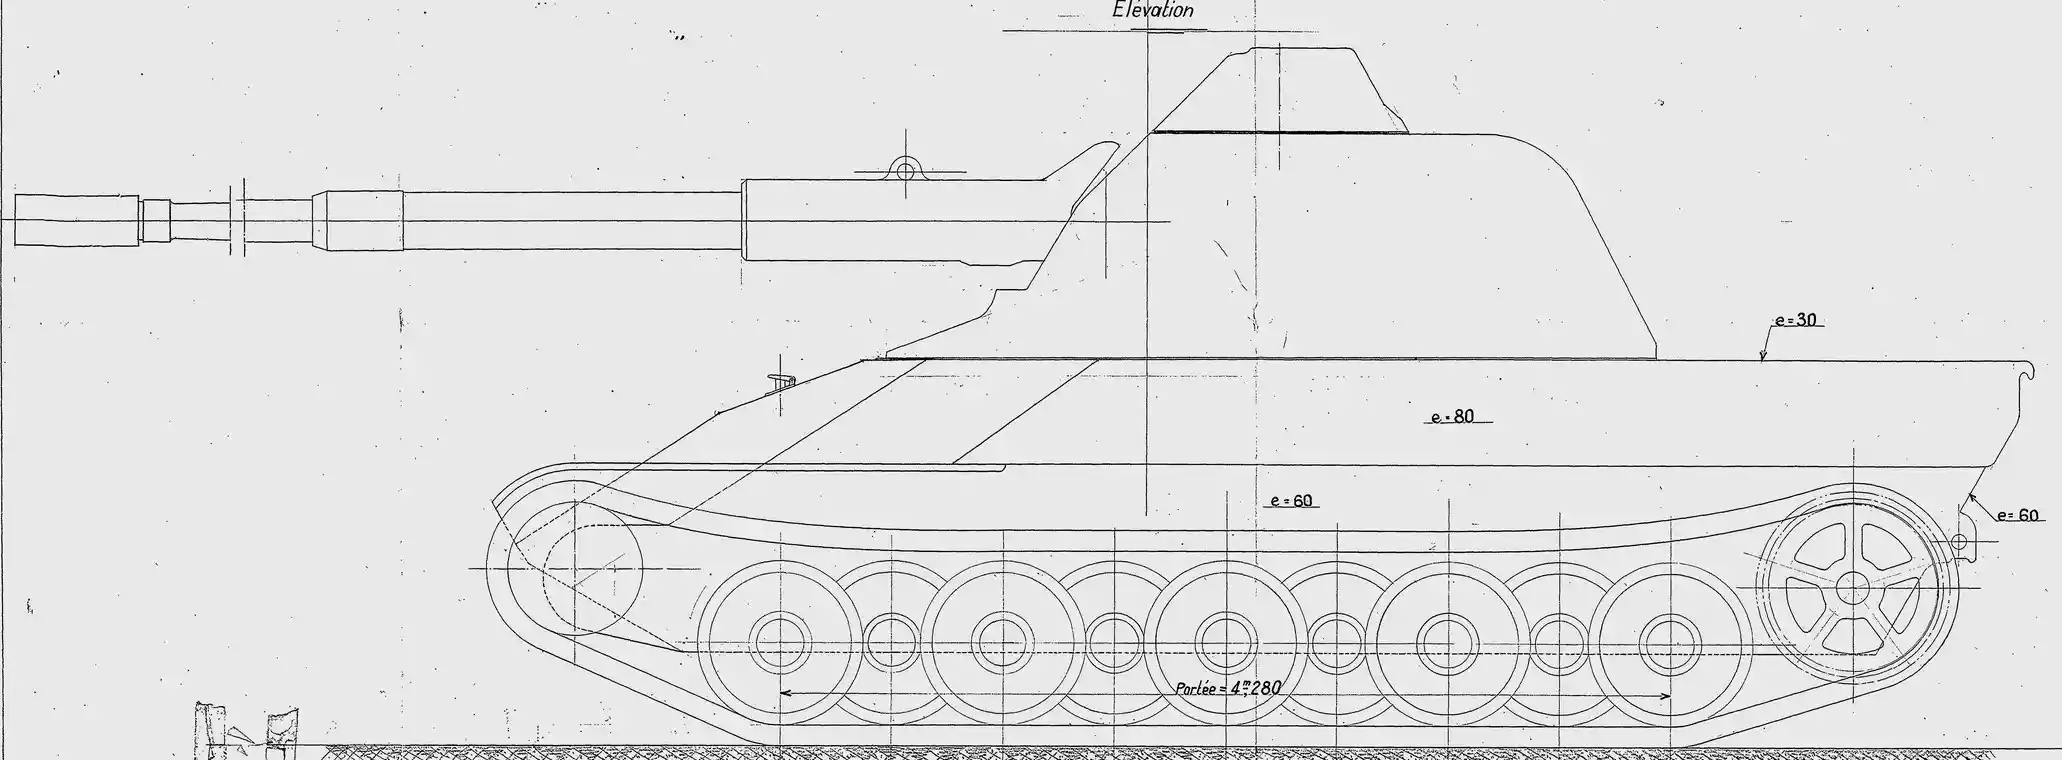 AMX_65t_history02.jpg